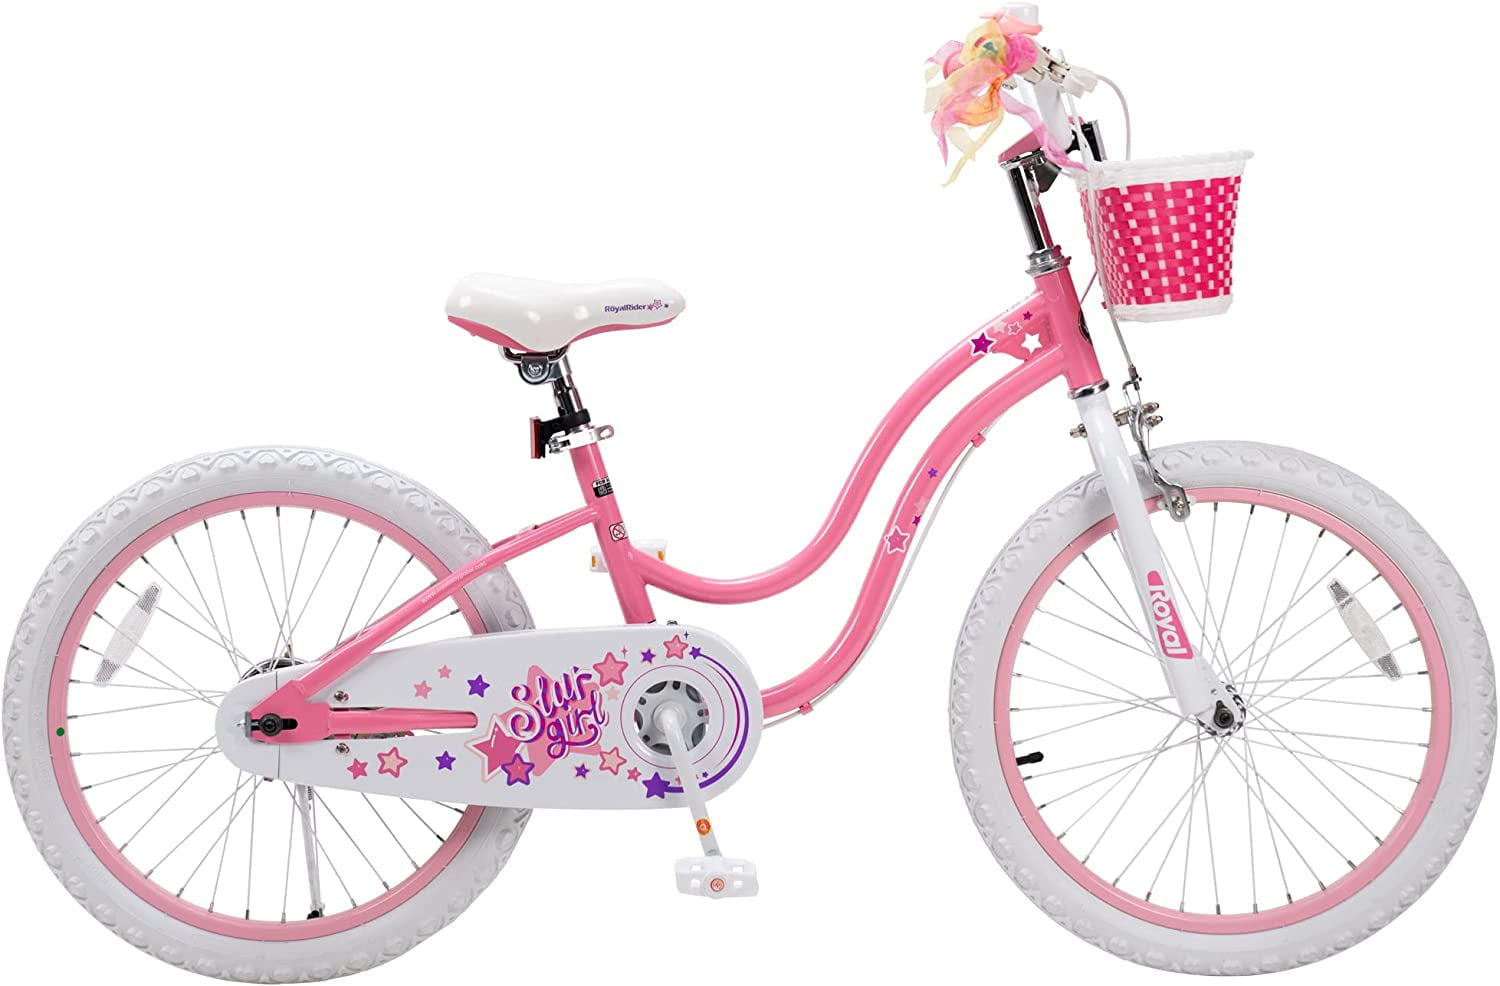 RoyalBaby Stargirl Kids Bike 20 Inch Girls Bicycle for Children with Kickstand Basket Blue